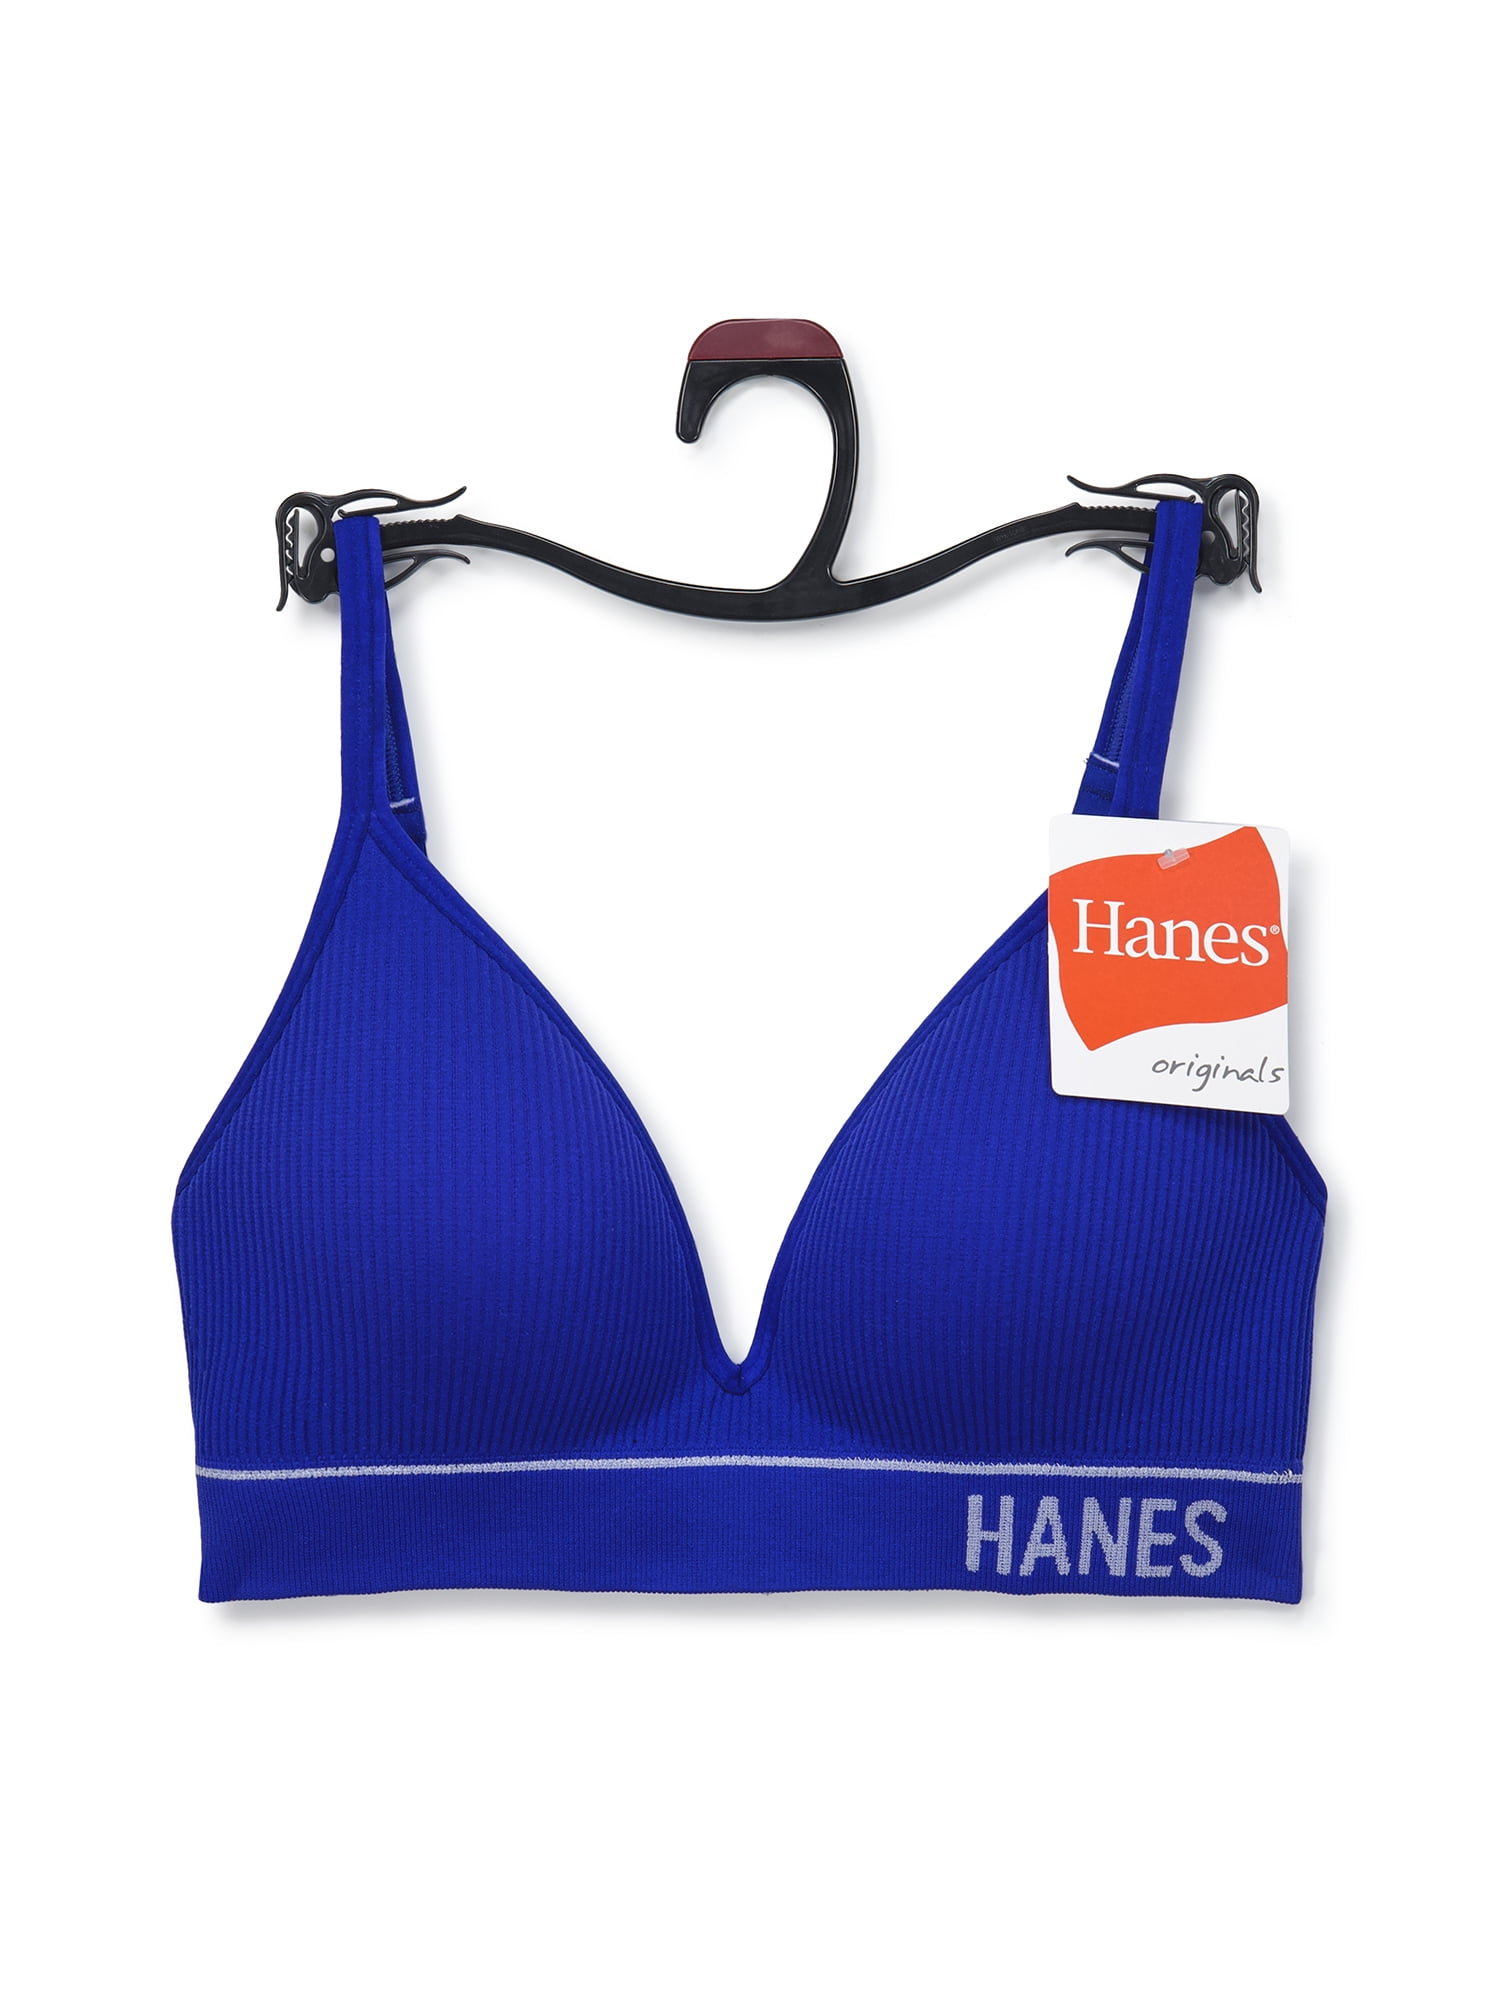 Hanes Originals Women's Ribbed Seamless Contour Bra Mhb004 - Teal Blue M :  Target